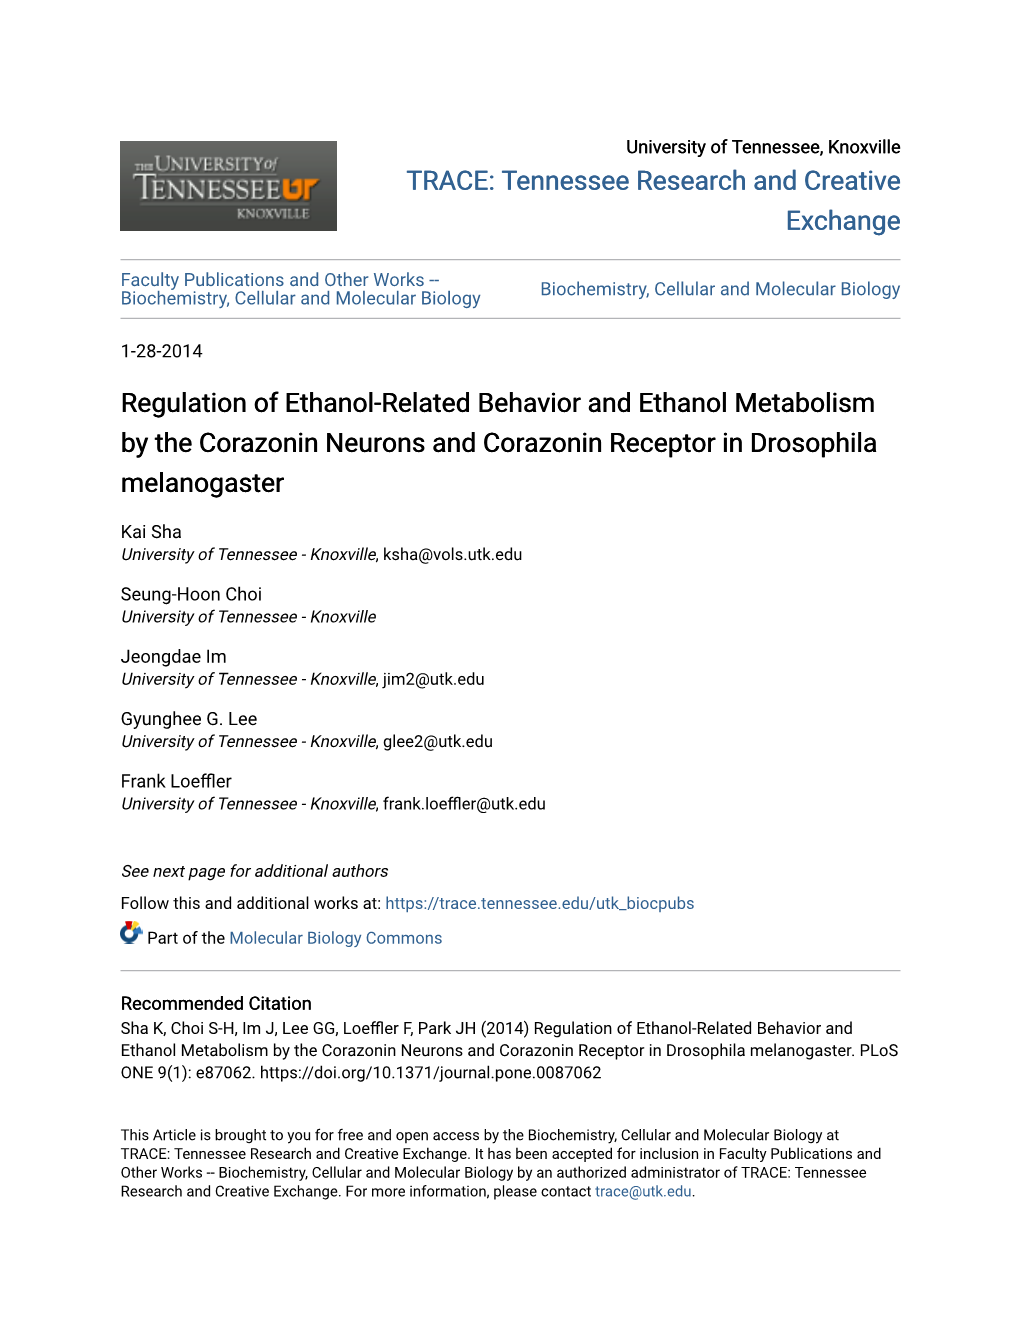 Regulation of Ethanol-Related Behavior and Ethanol Metabolism by the Corazonin Neurons and Corazonin Receptor in Drosophila Melanogaster